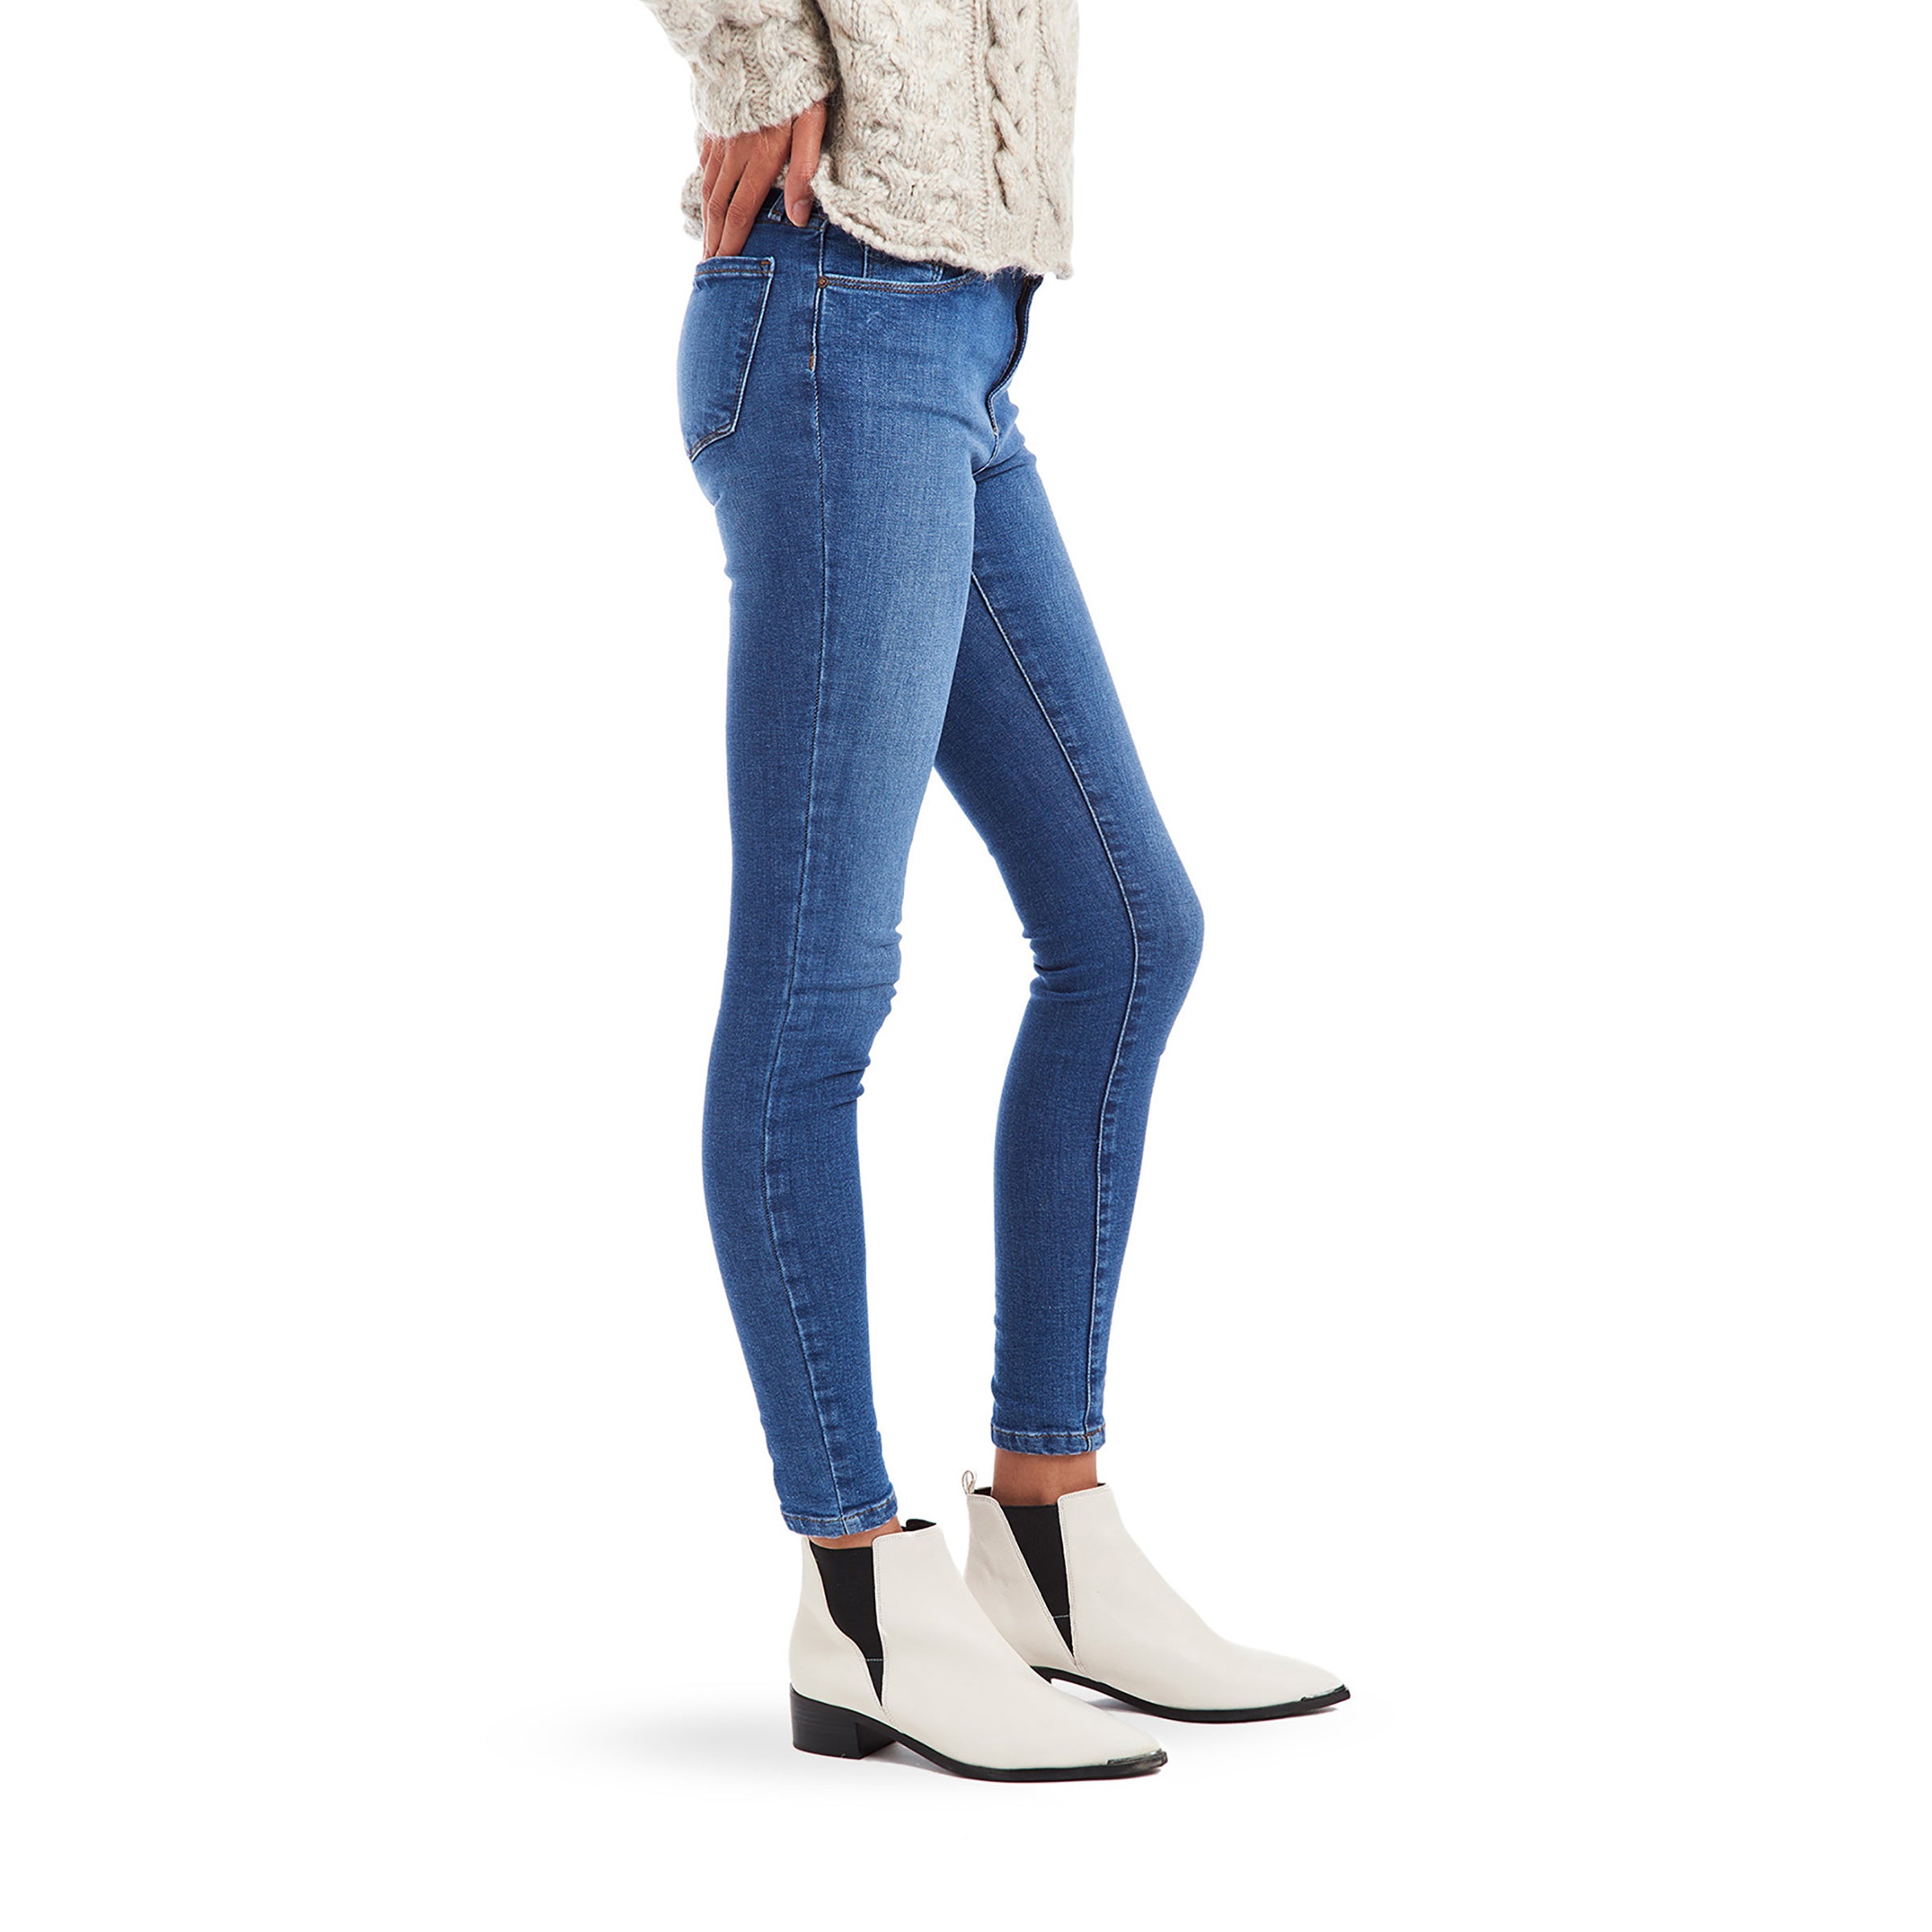 Women wearing Azul medio/claro High Rise Skinny Beekman Jeans